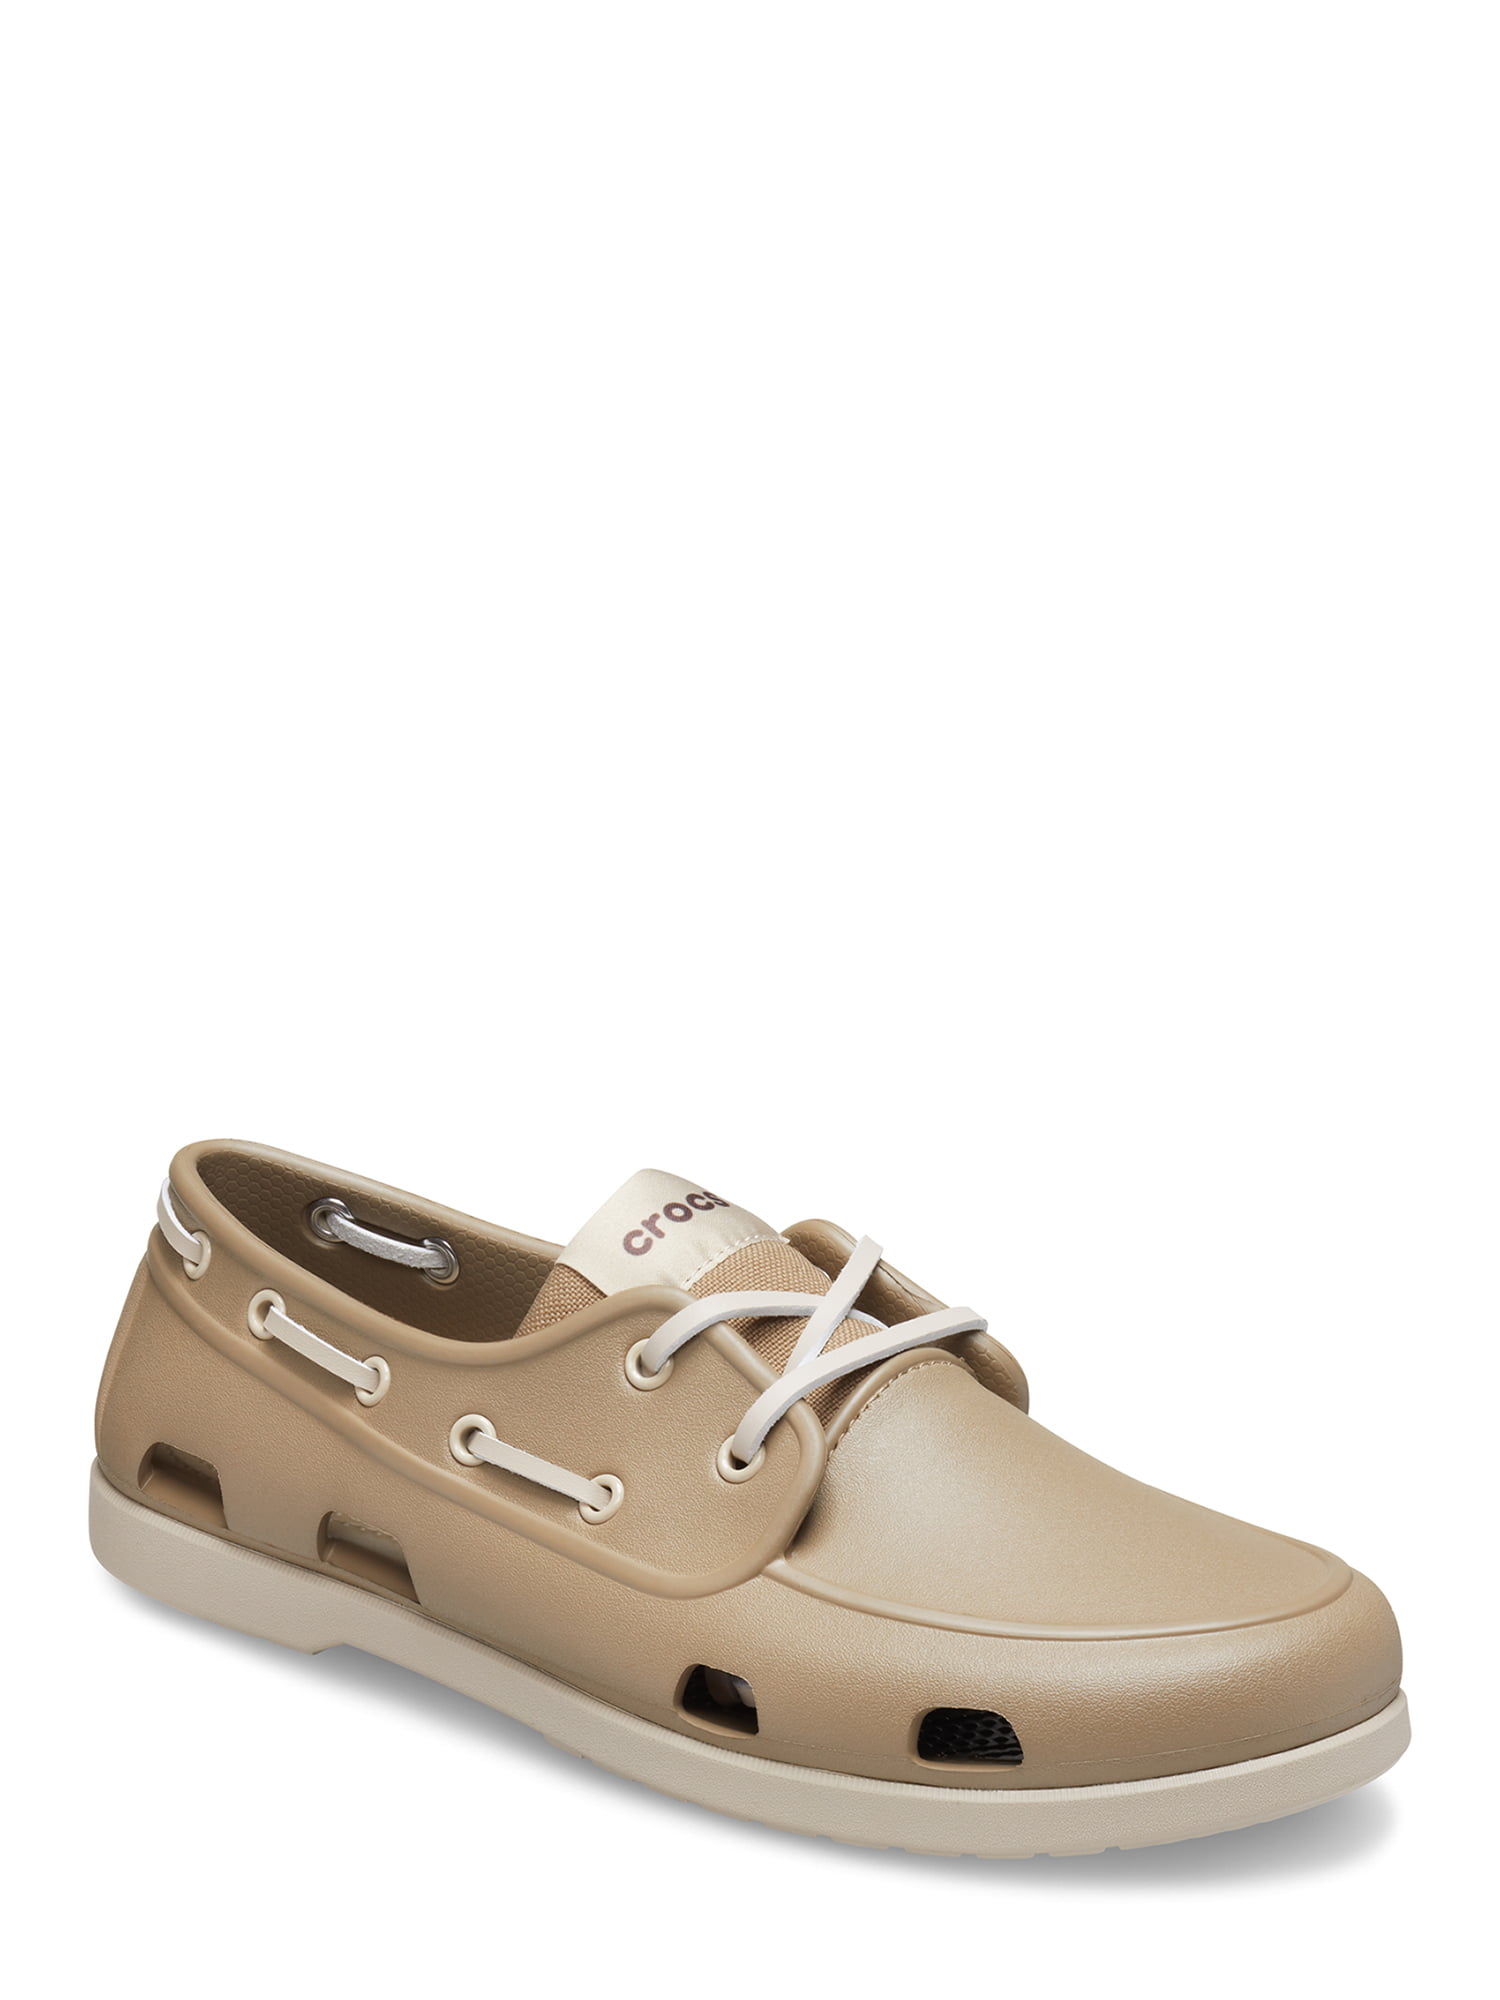 crocs men's classic boat shoe